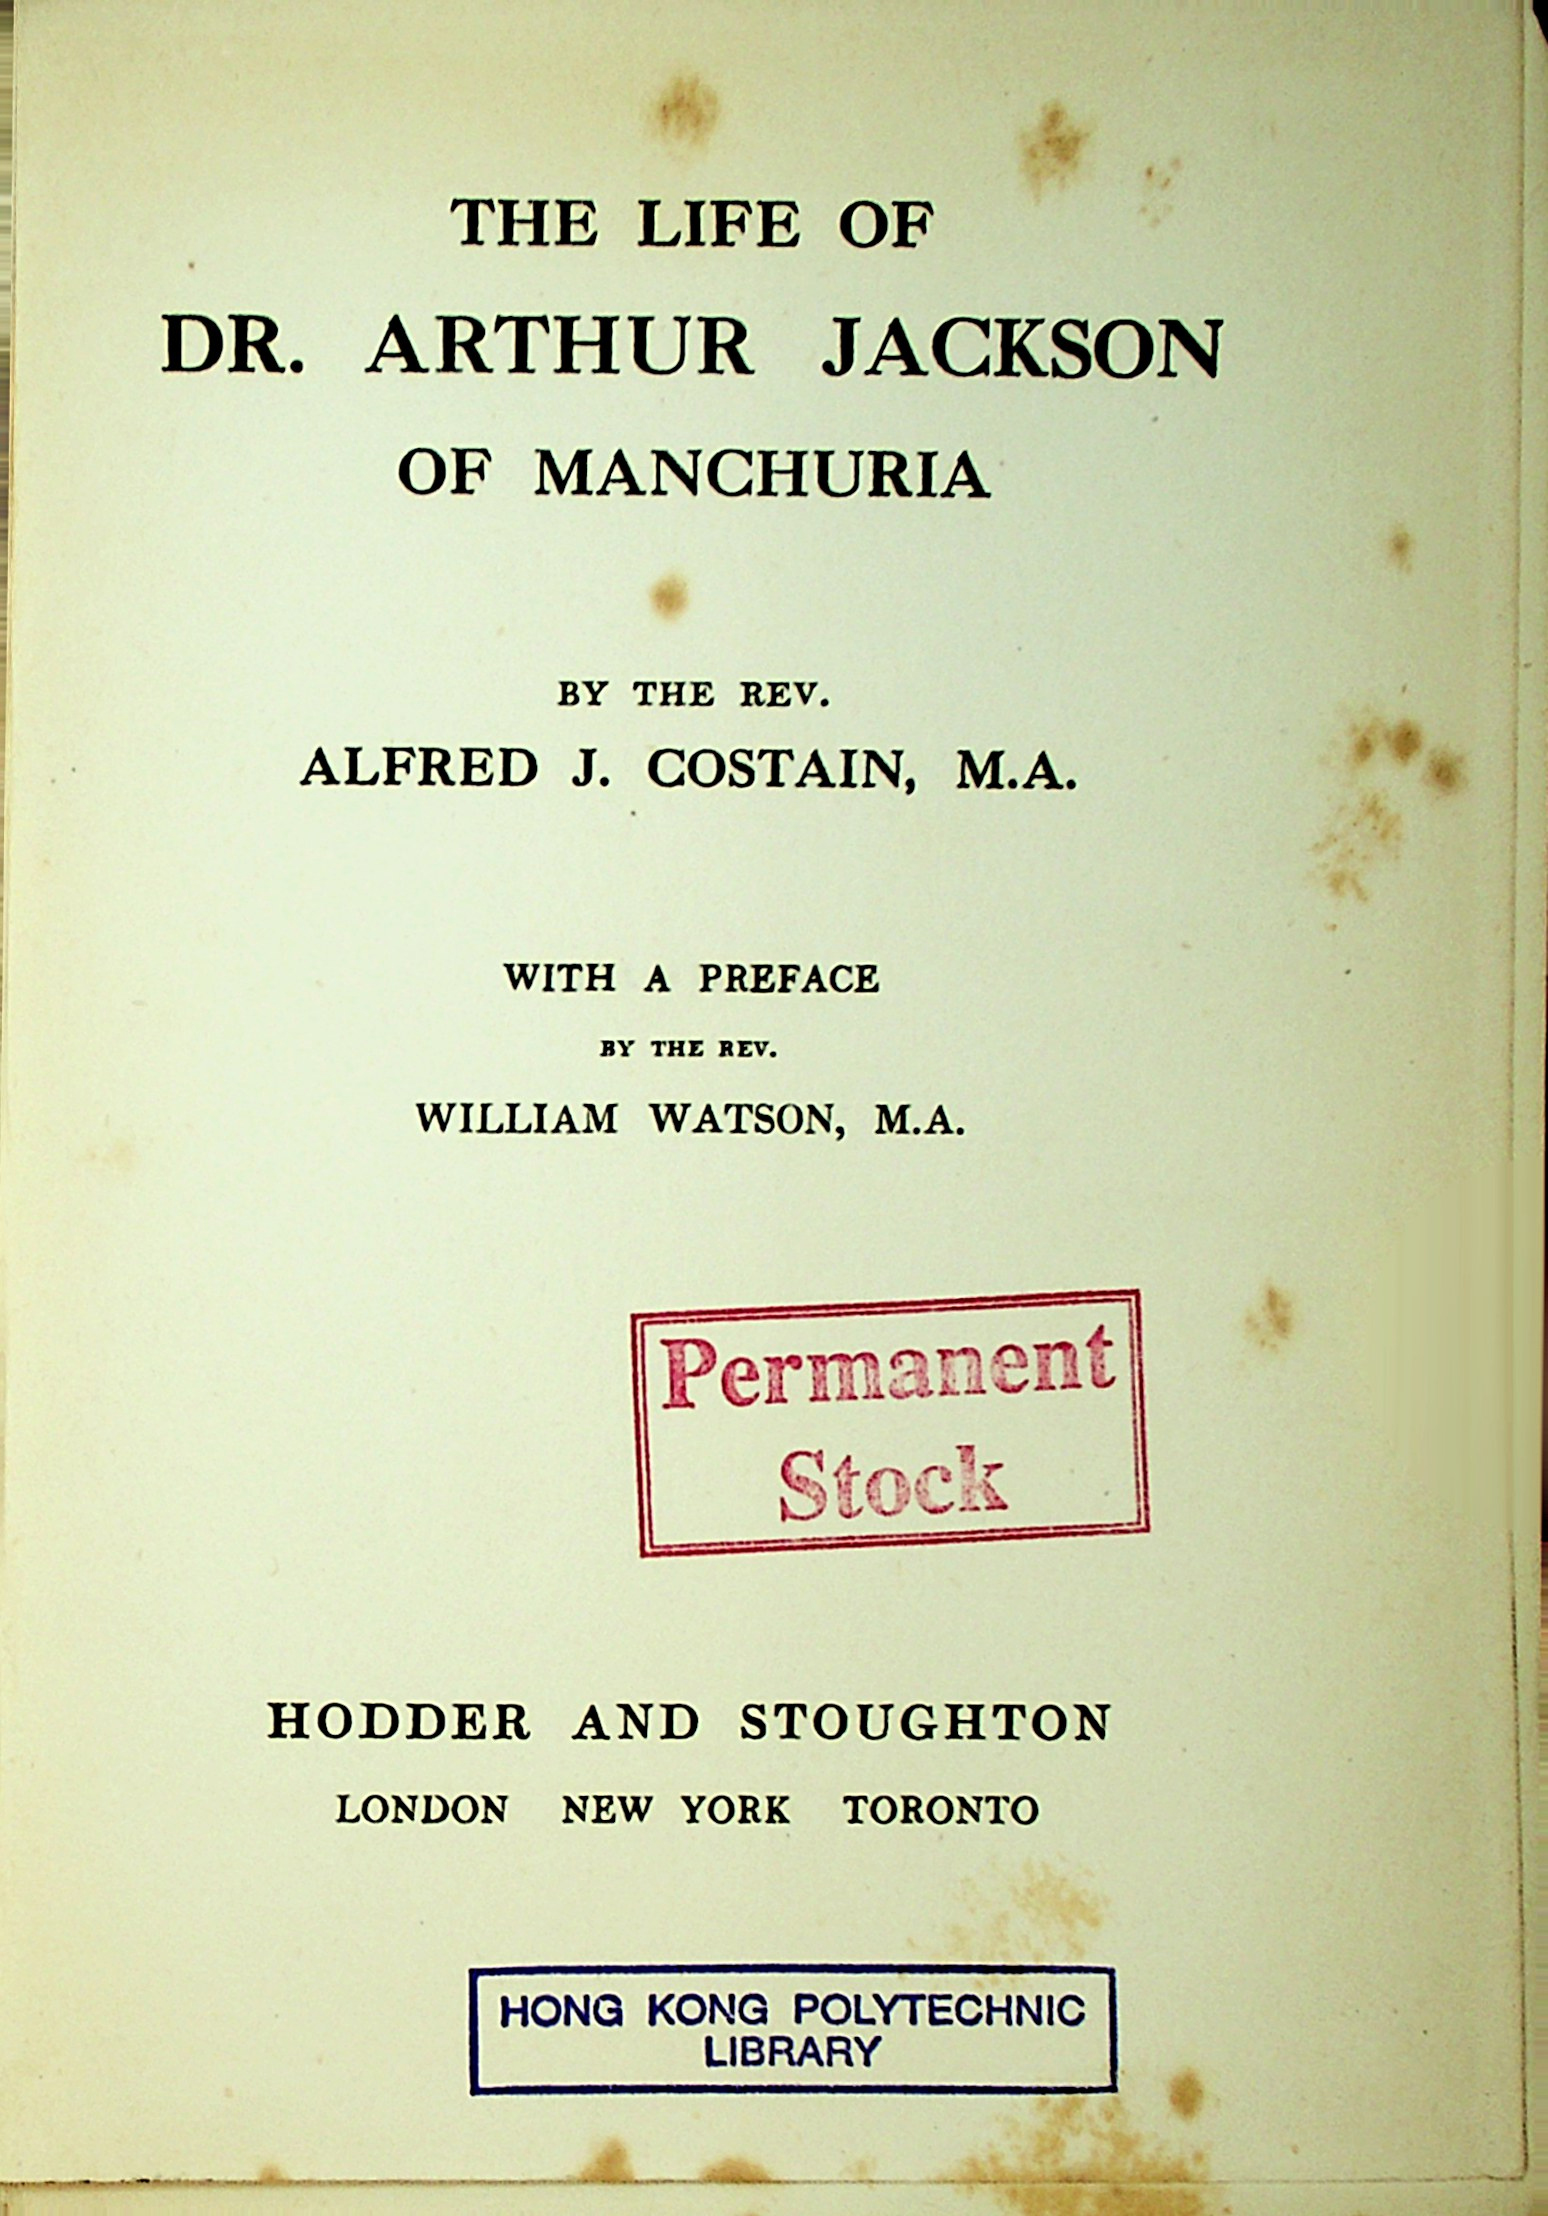 The life of Dr. Arthur Jackson of Manchuria